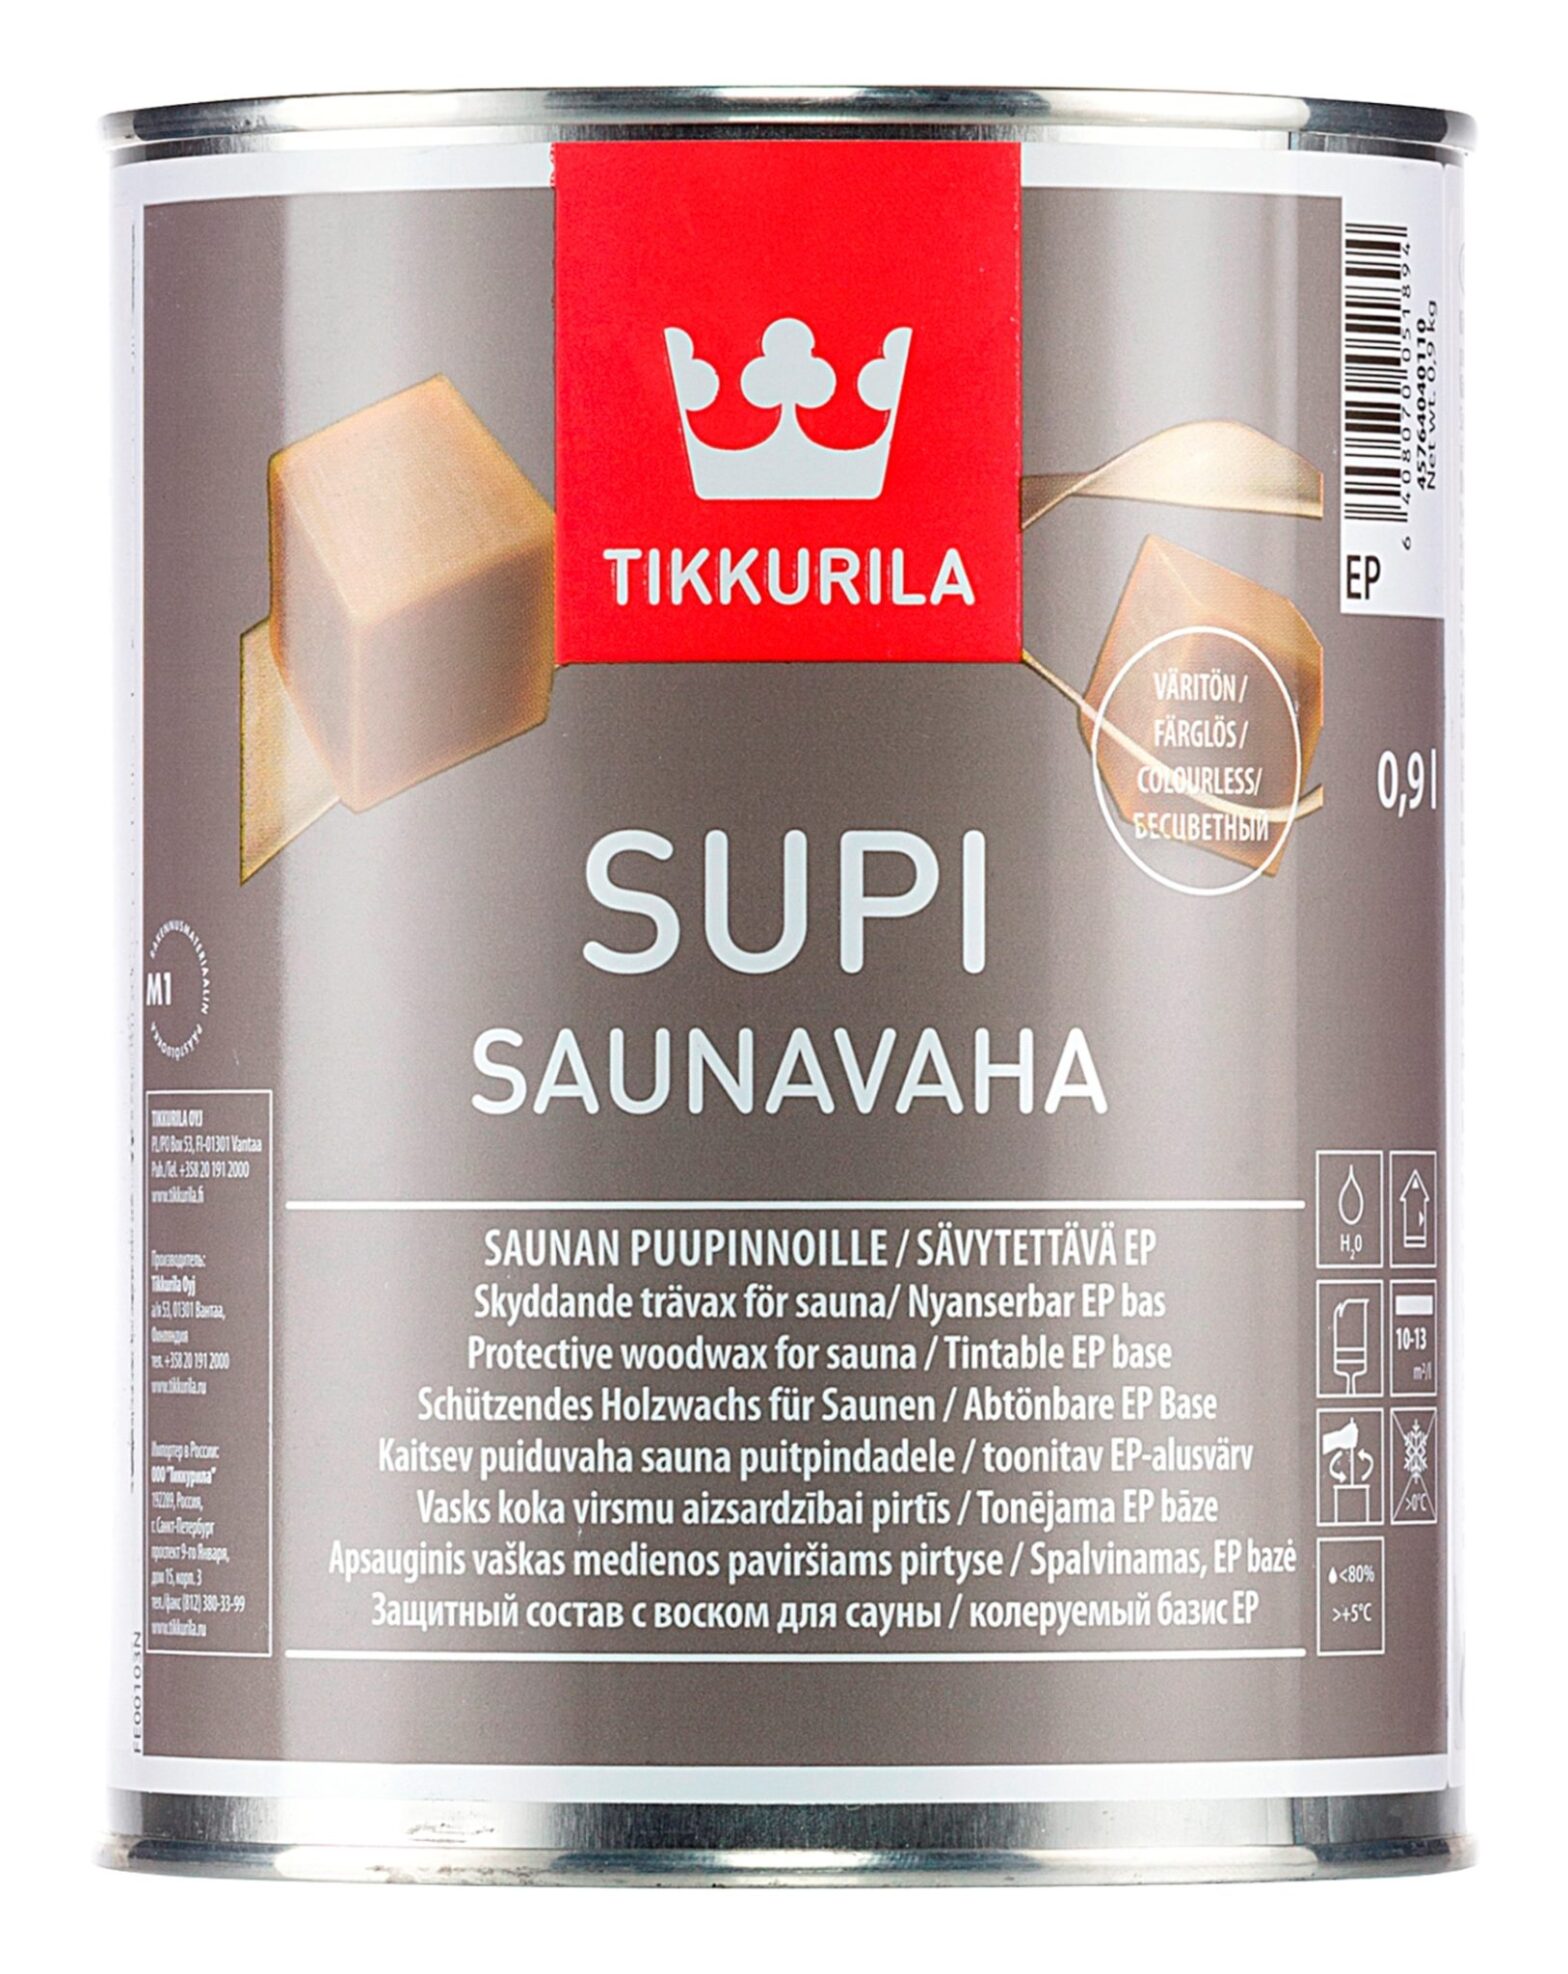 Тиккурила для бань купить. Tikkurila Supi Saunasuoja 9 л. Tikkurila Supi saunavaha. Пропитка Tikkurila Supi Saunasuoja. "Tikkurila" состав для сауны Supi Saunasuoja Ep п/мат 2,7л 86864040130.